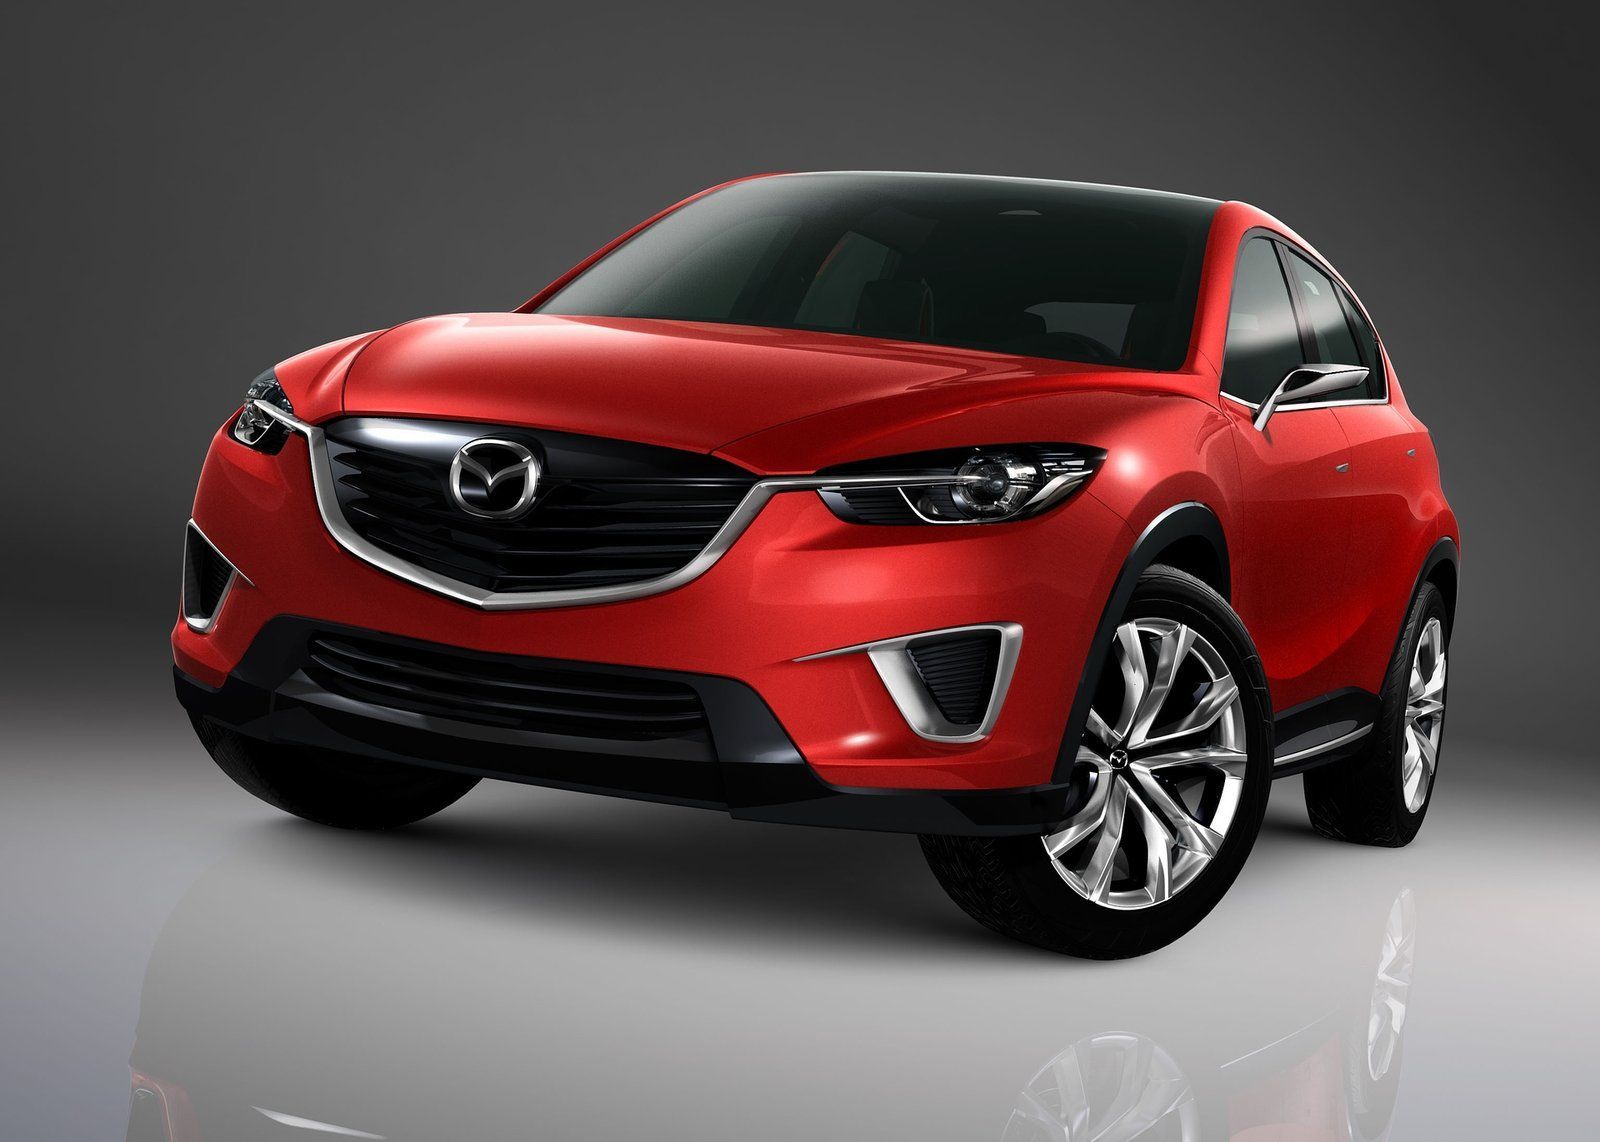 Mazda koncepty